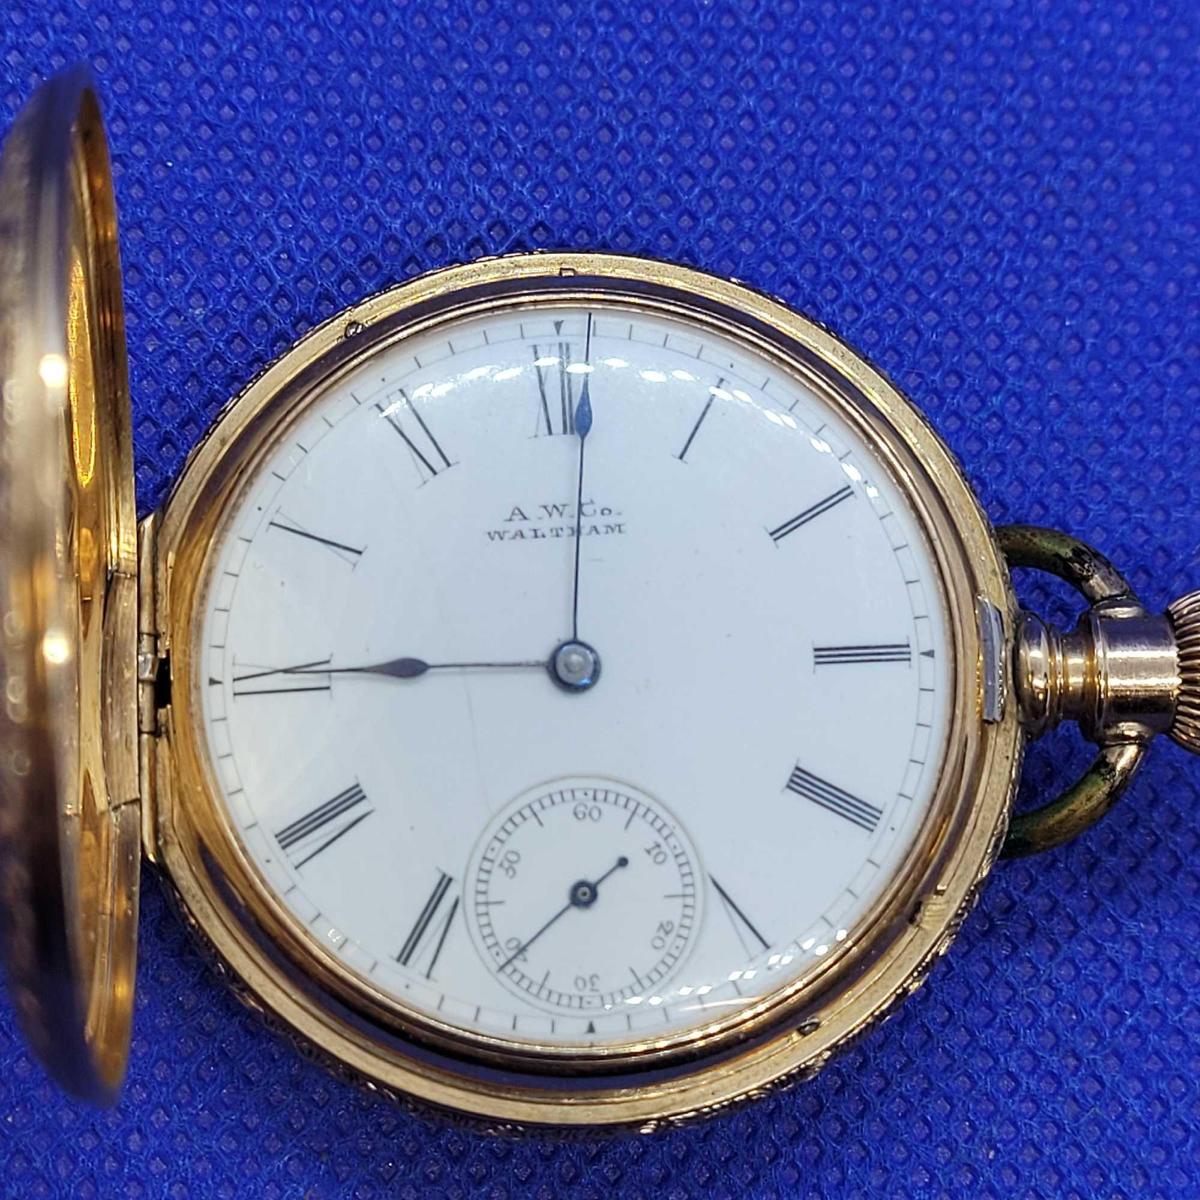 A.W. Co. Waltham 14kt gold pocket watch